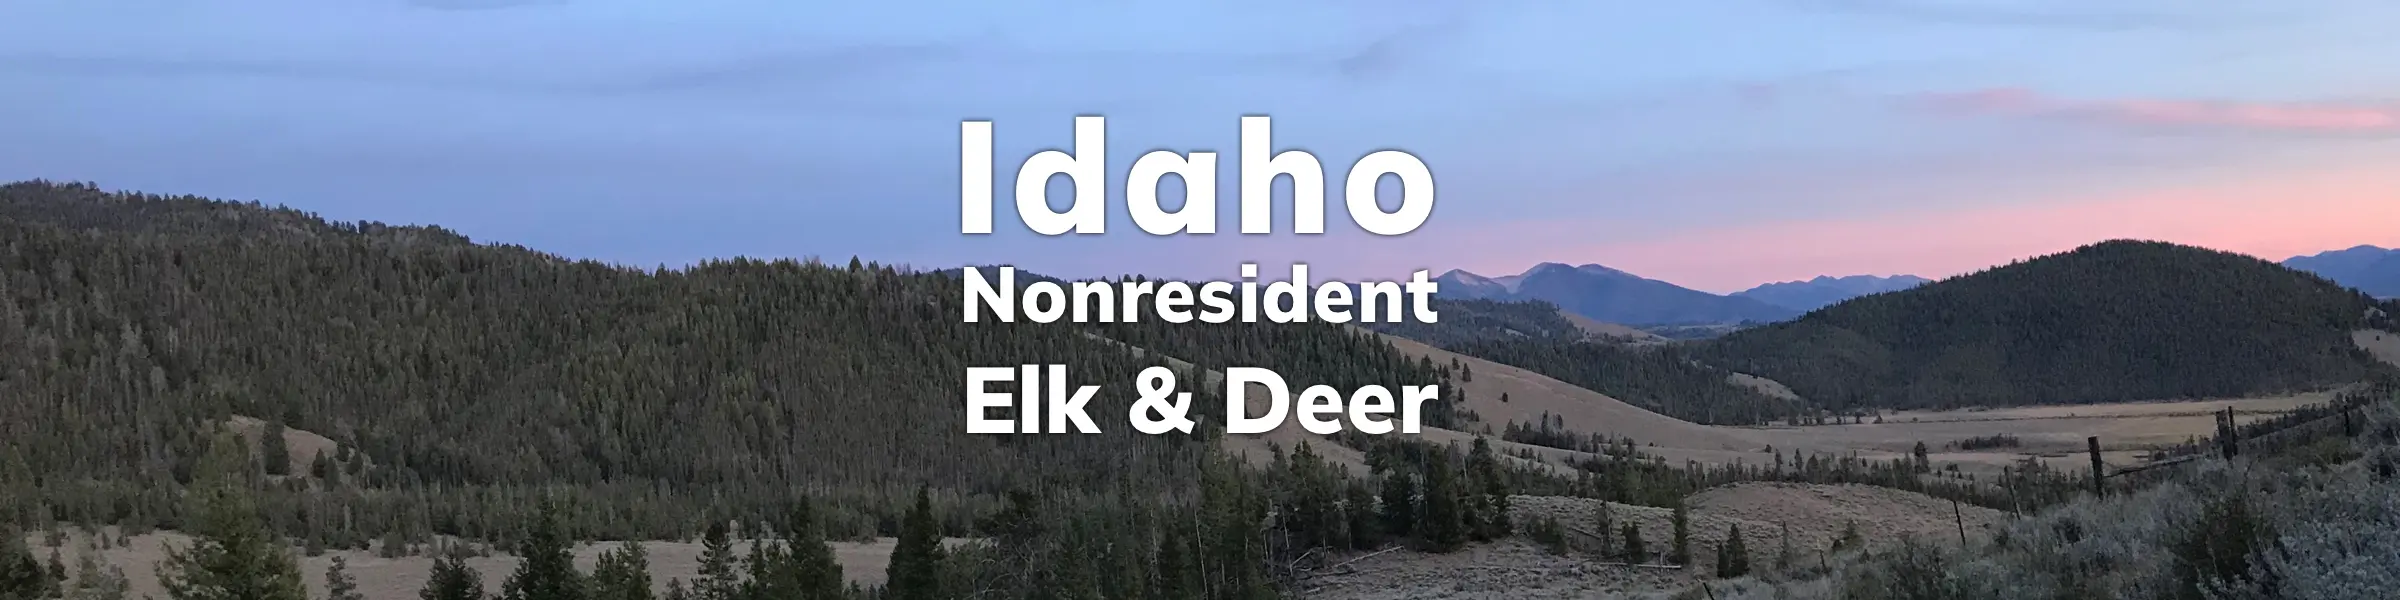 Idaho Nonresident Elk